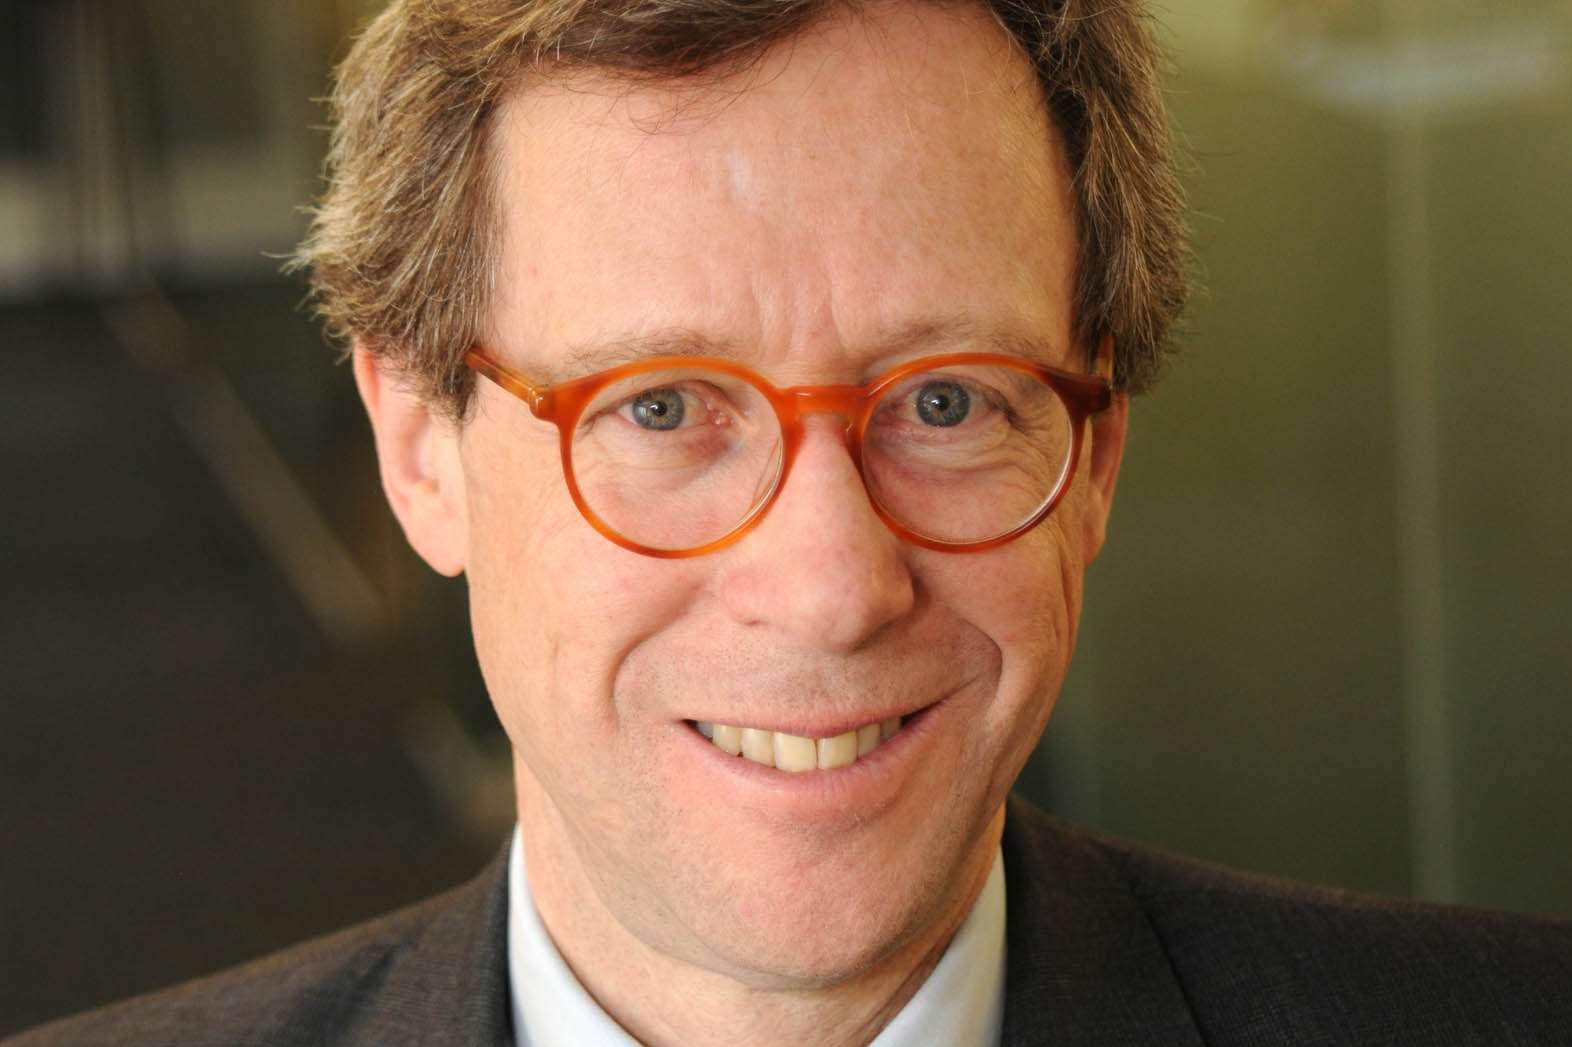 Patrick Crawford, CEO of Charity Bank